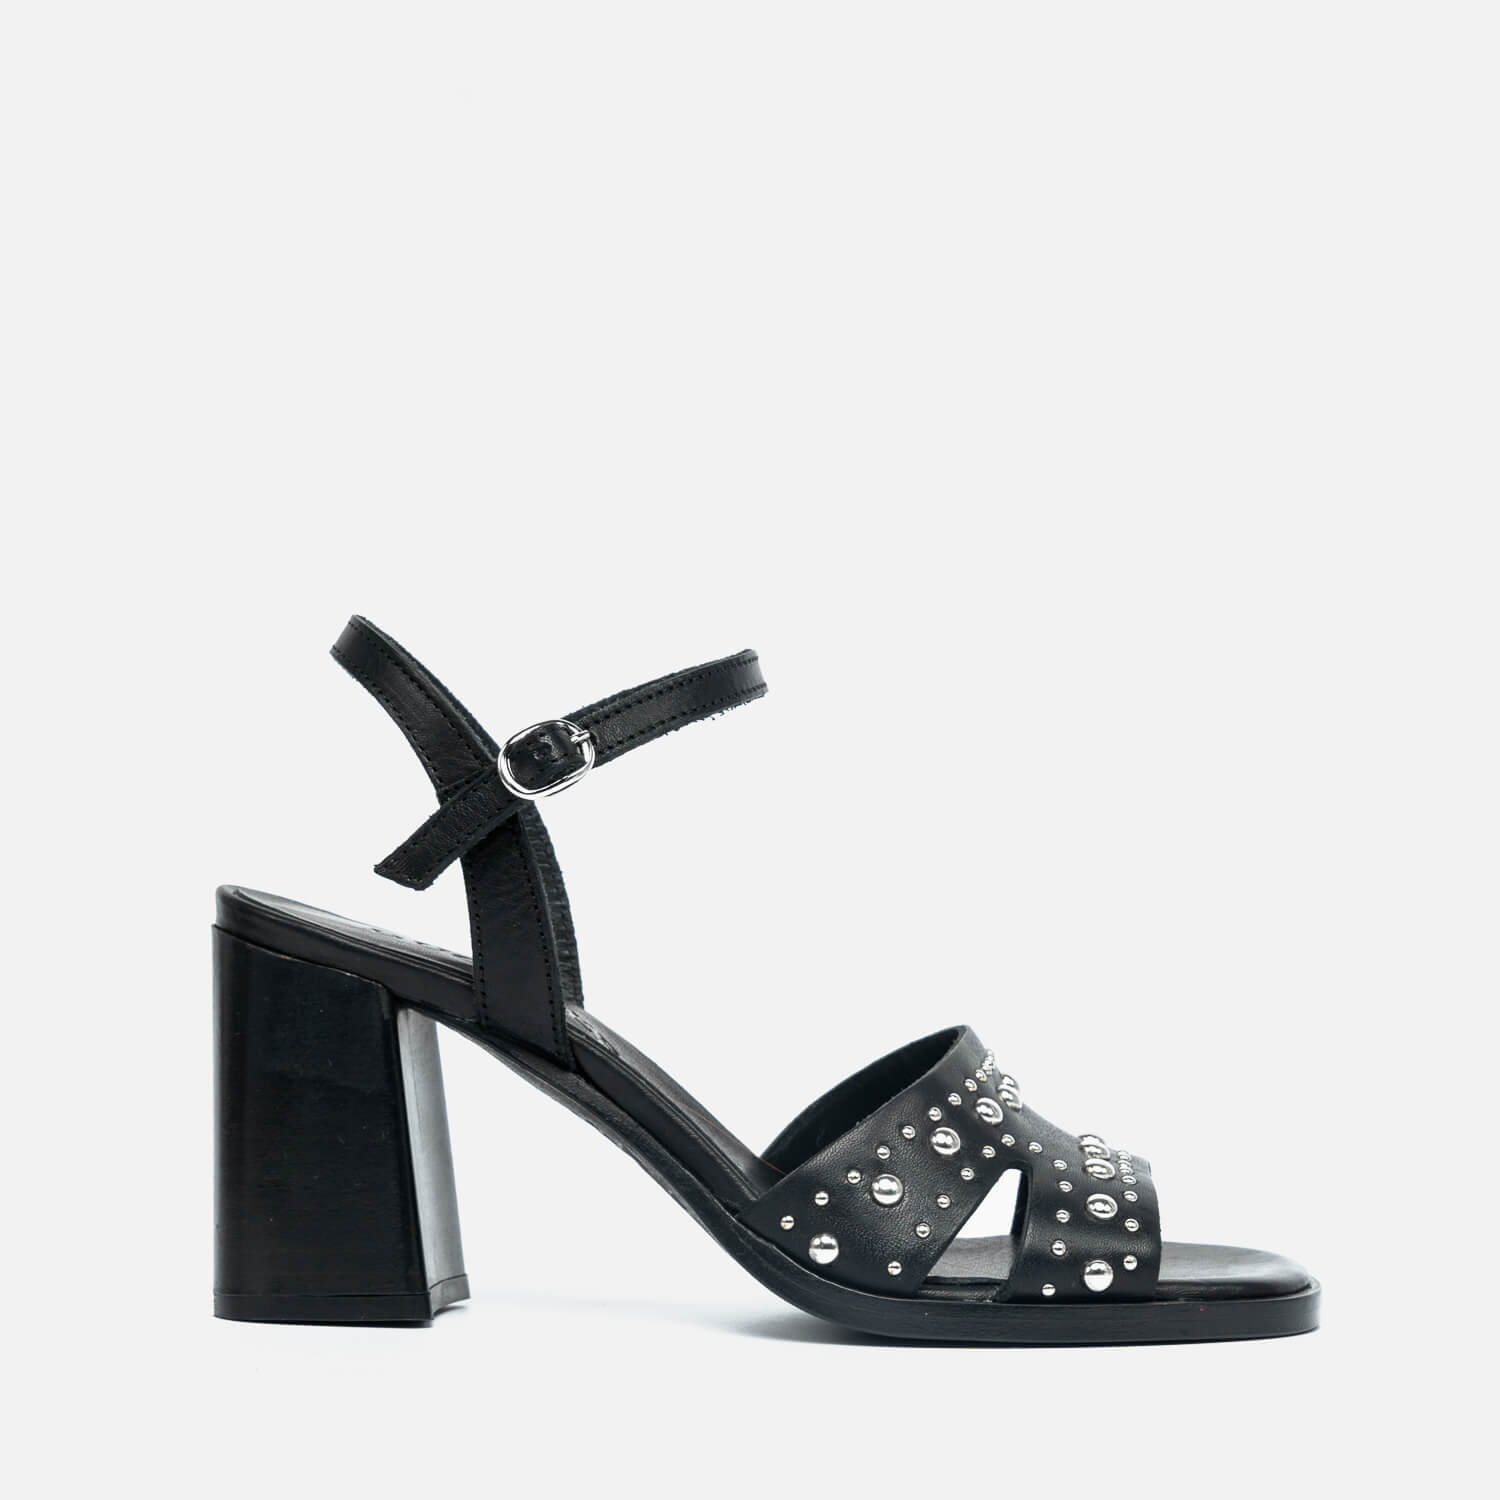 Benedetta | Model 3786 sandals black